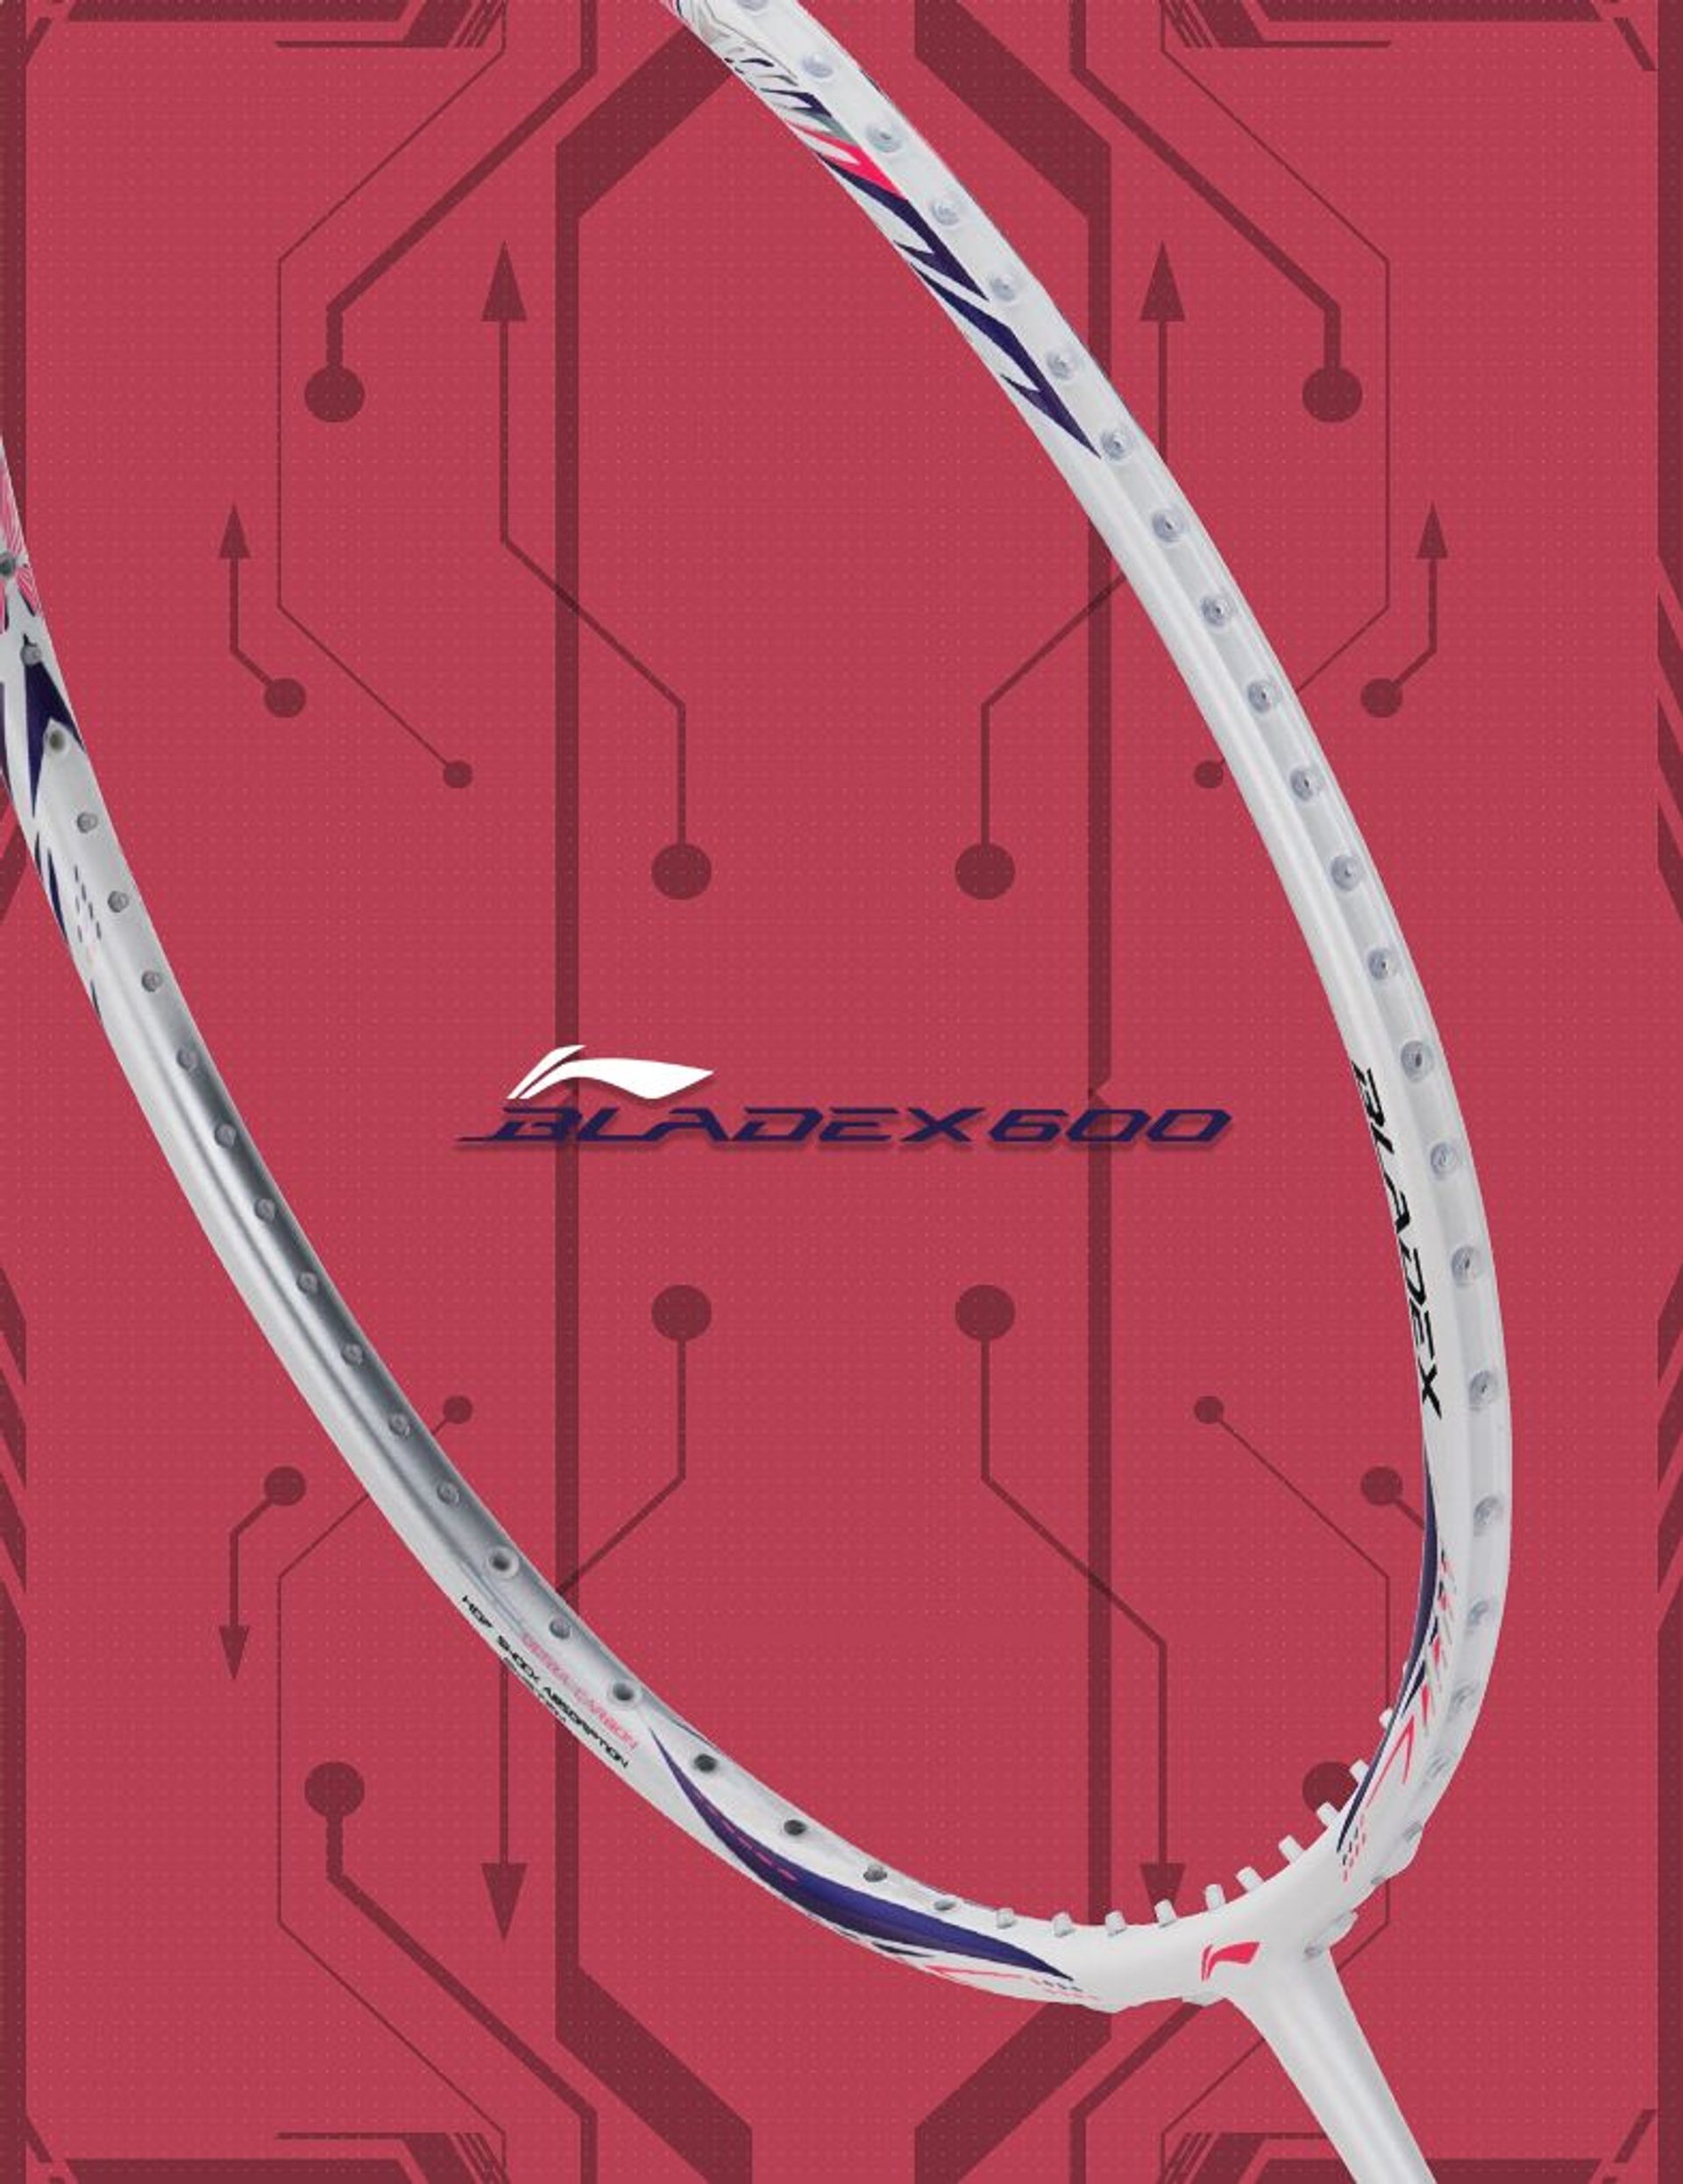 BladeX 600 Badminton Racket